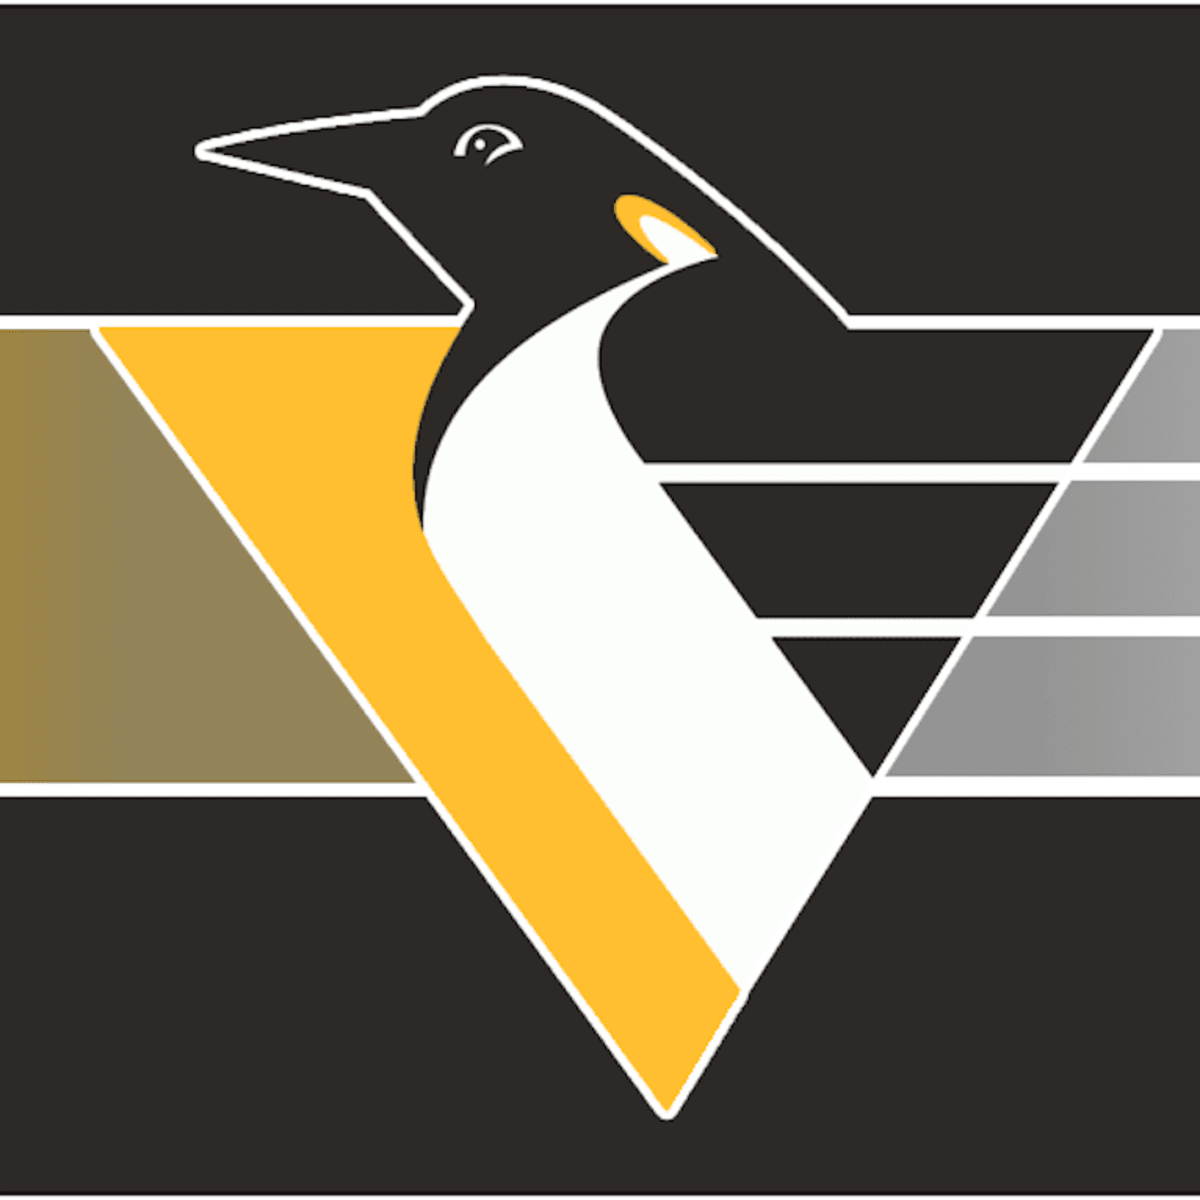 Robo-Penguin returns as Penguins' 'Reverse Retro' jersey